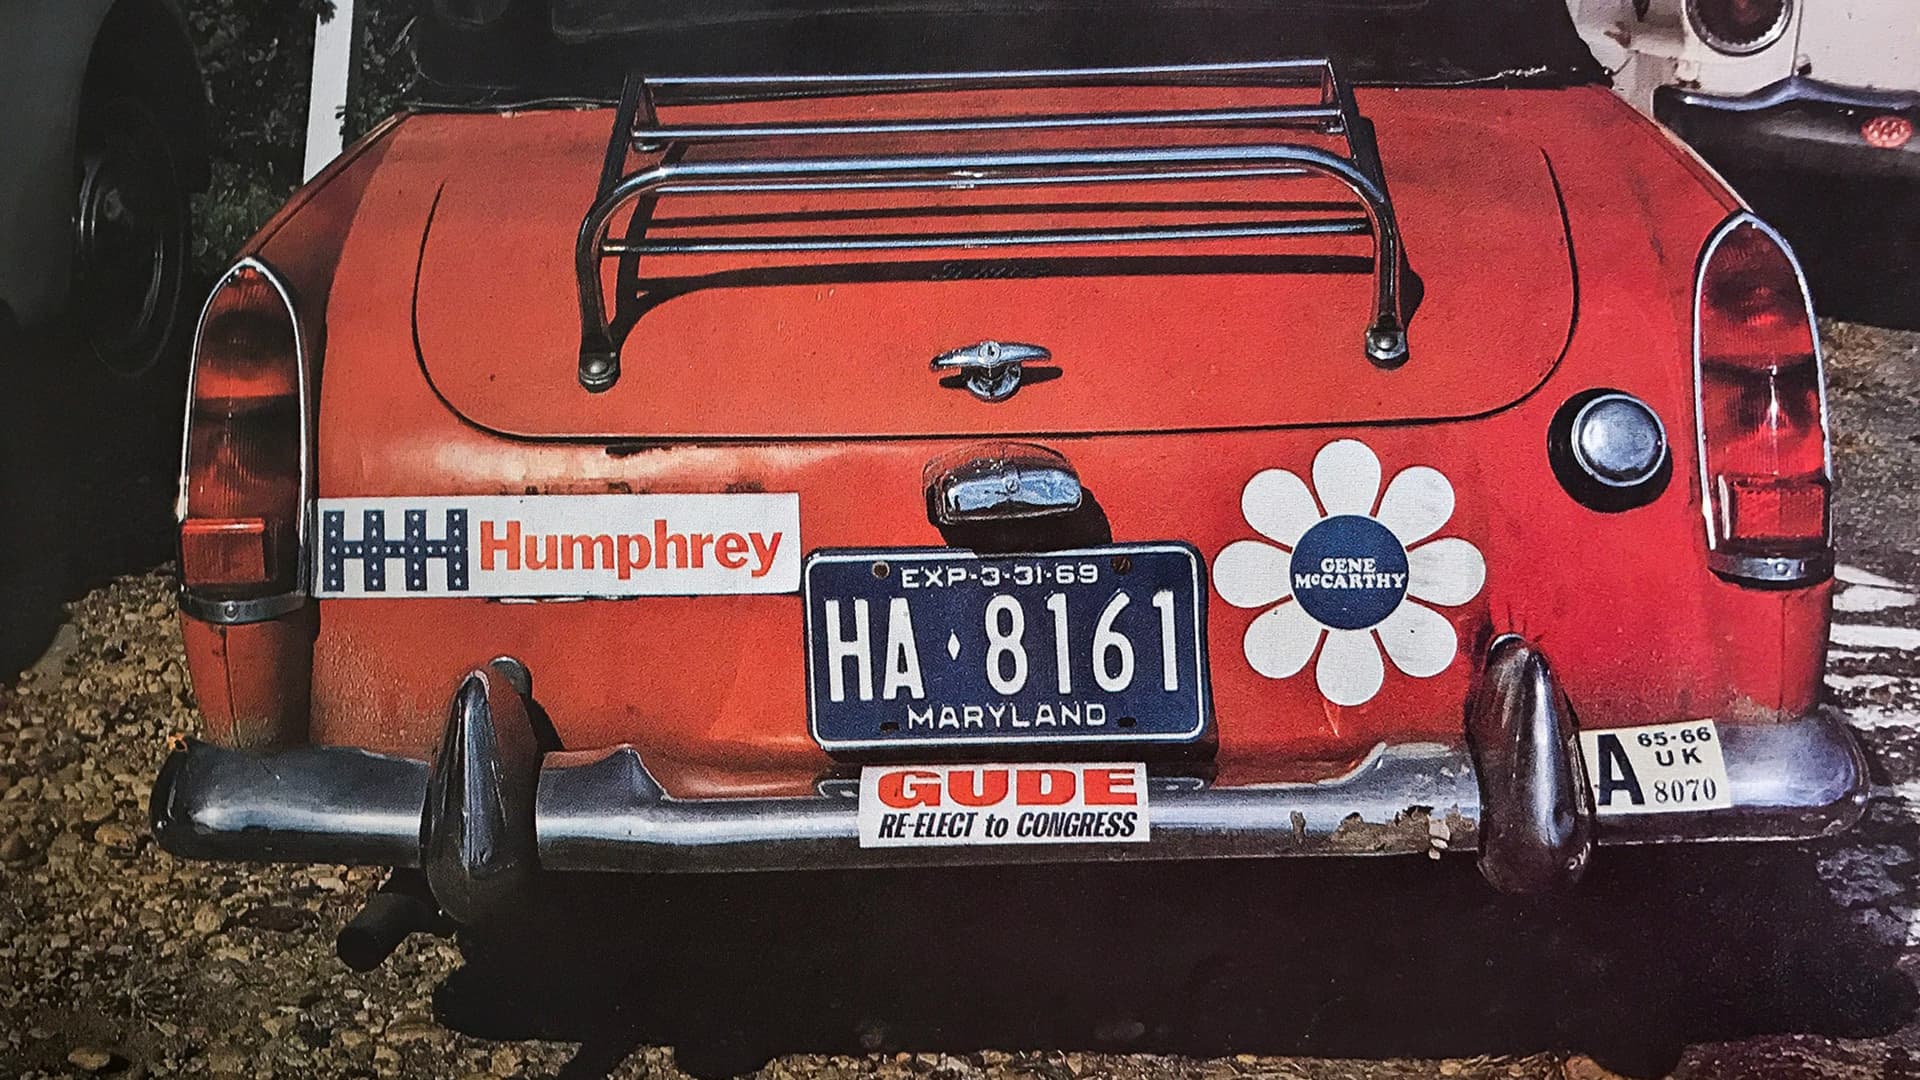 Bumper stickers for U.S. Sen. Eugene McCarthy and Vice President Hubert Humphrey